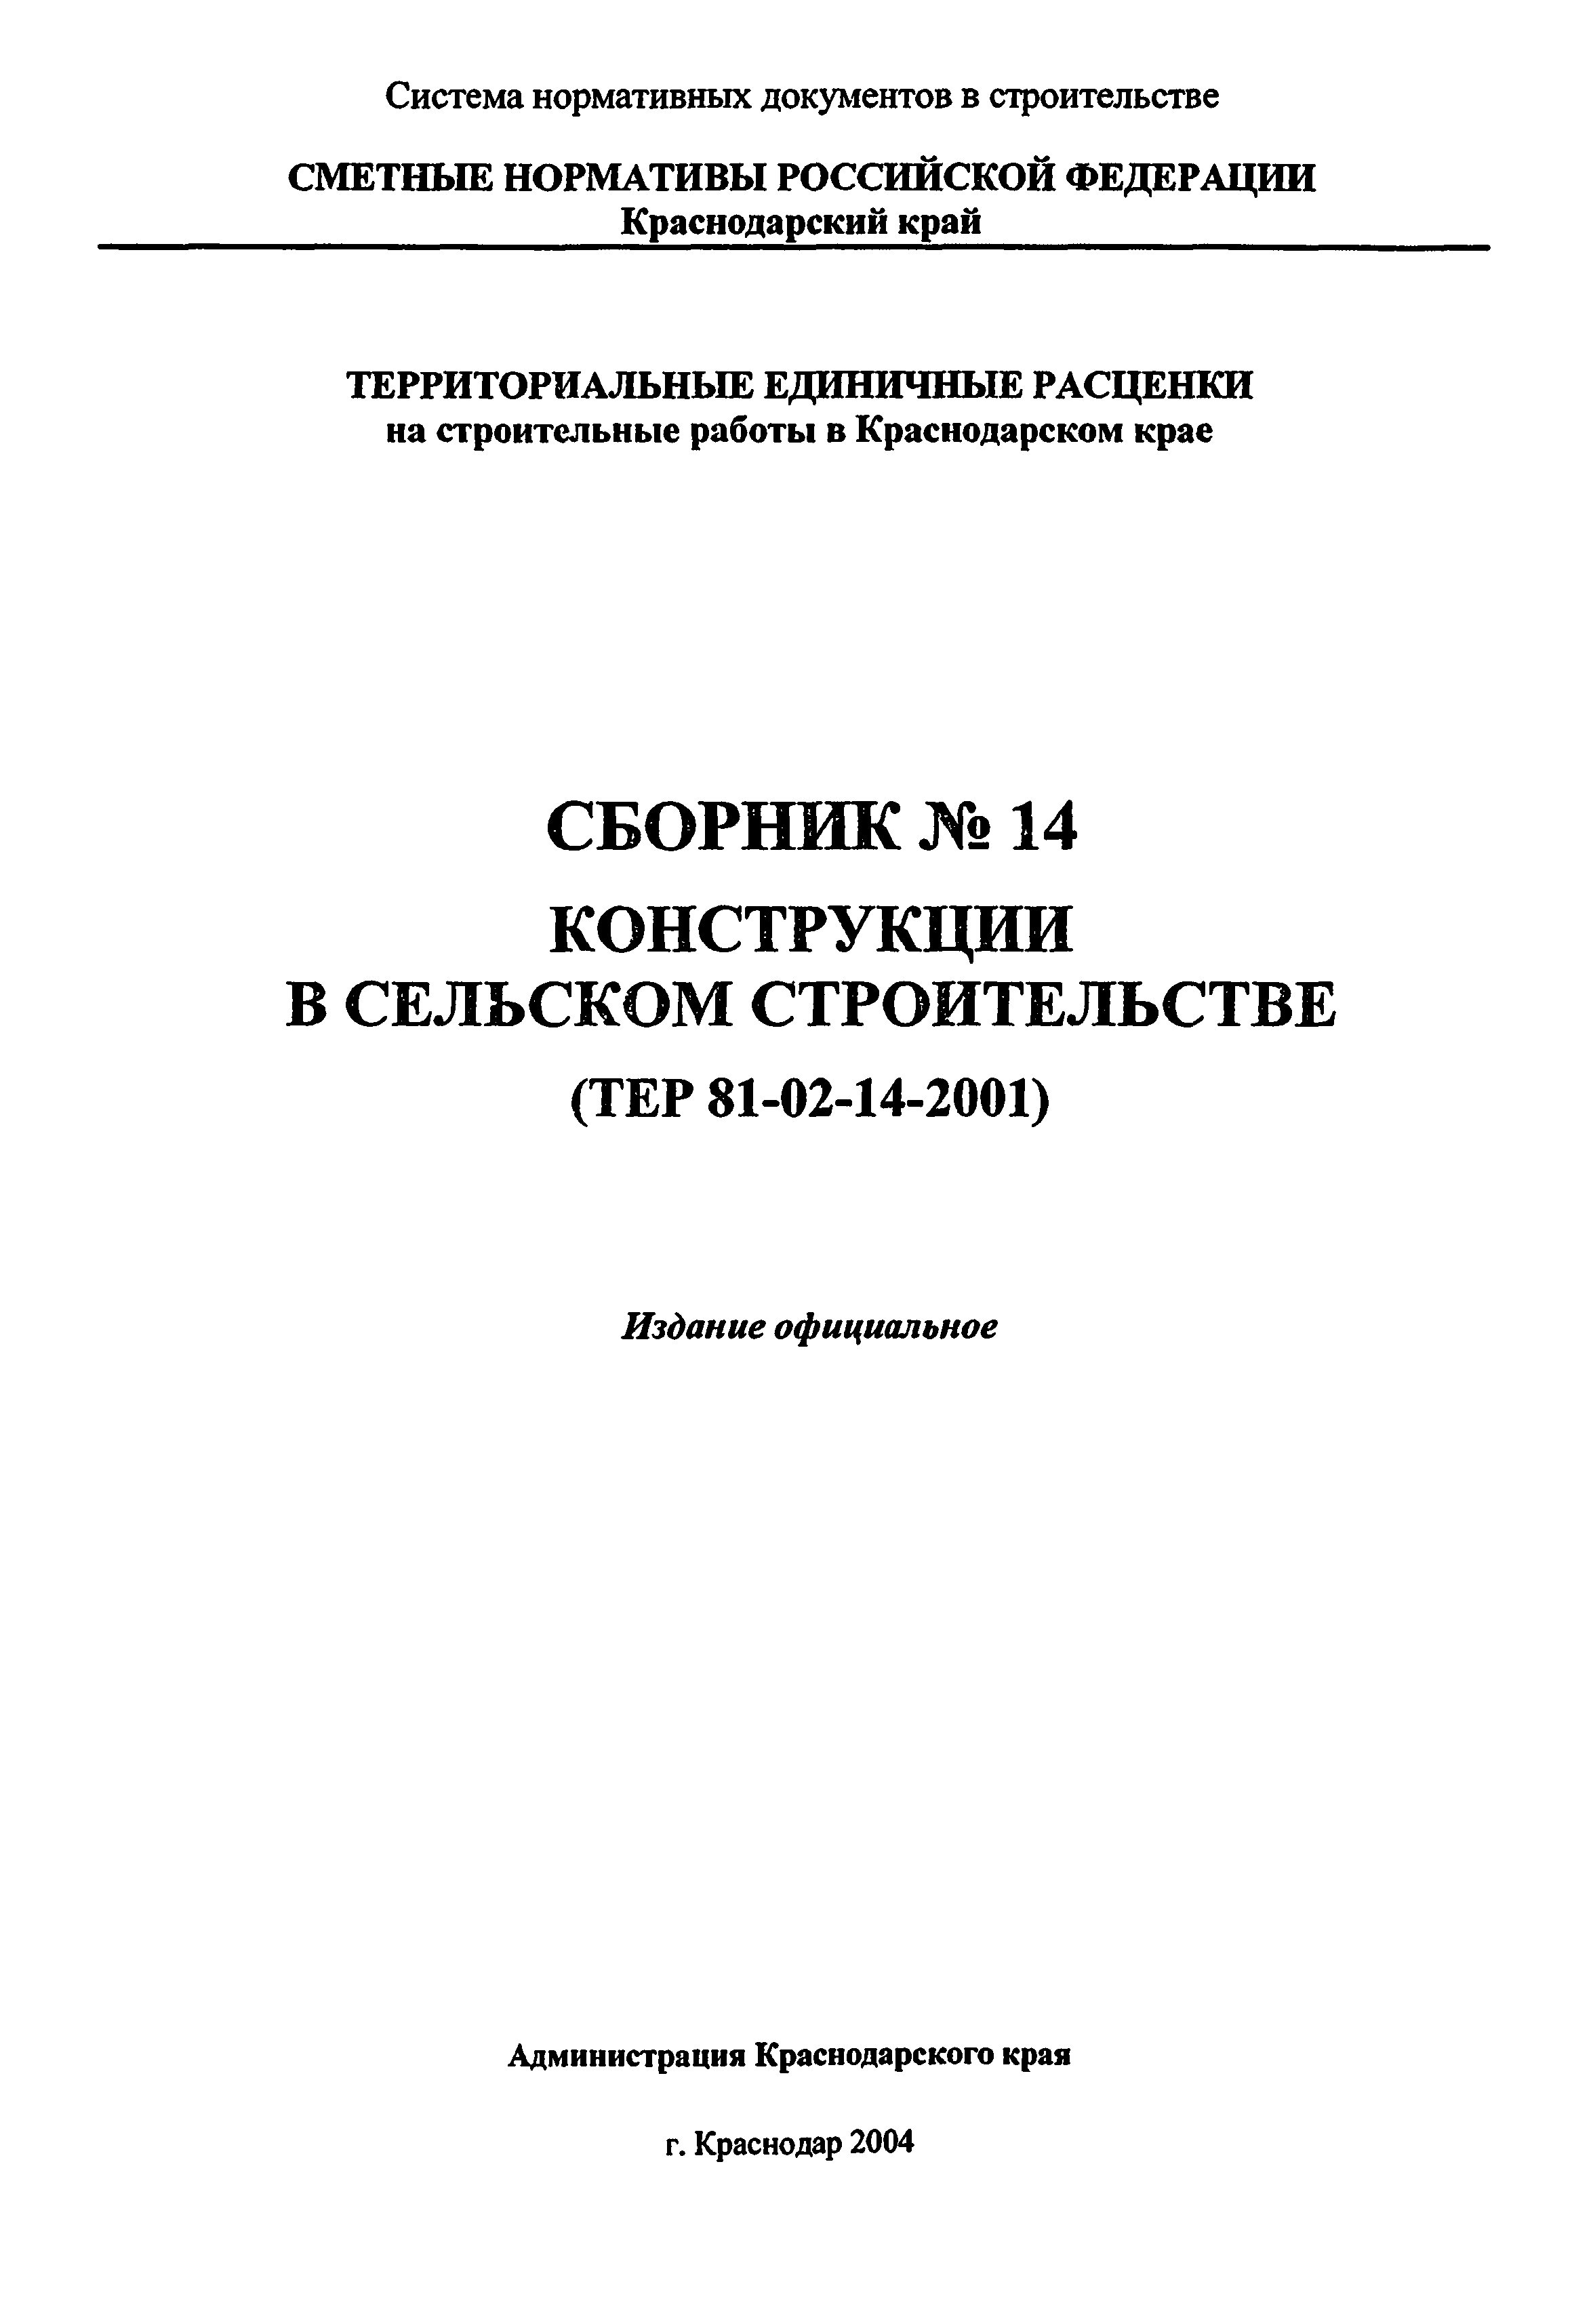 ТЕР Краснодарского края 2001-14